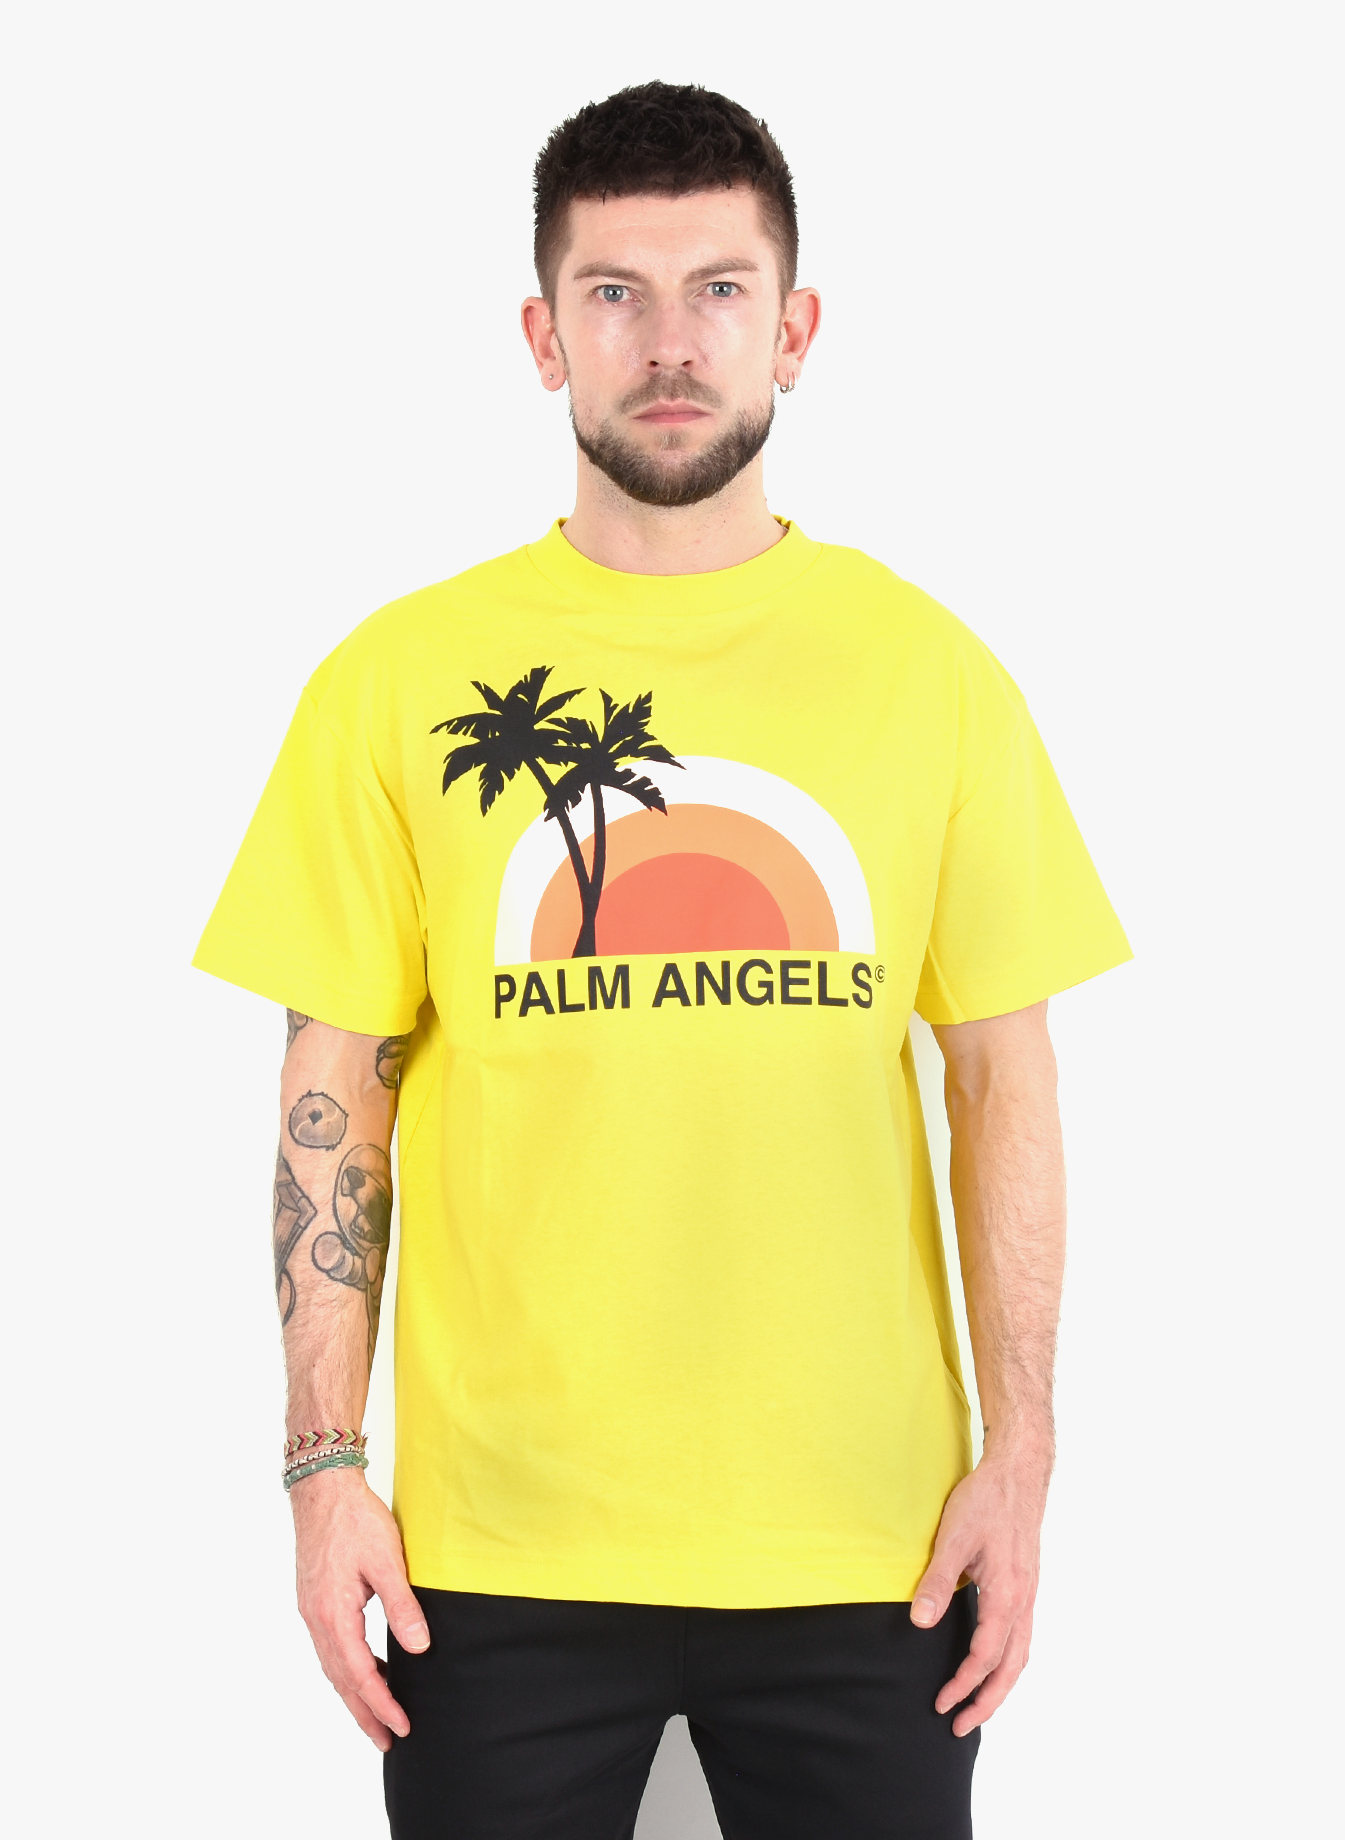 palm angels sunset shirt